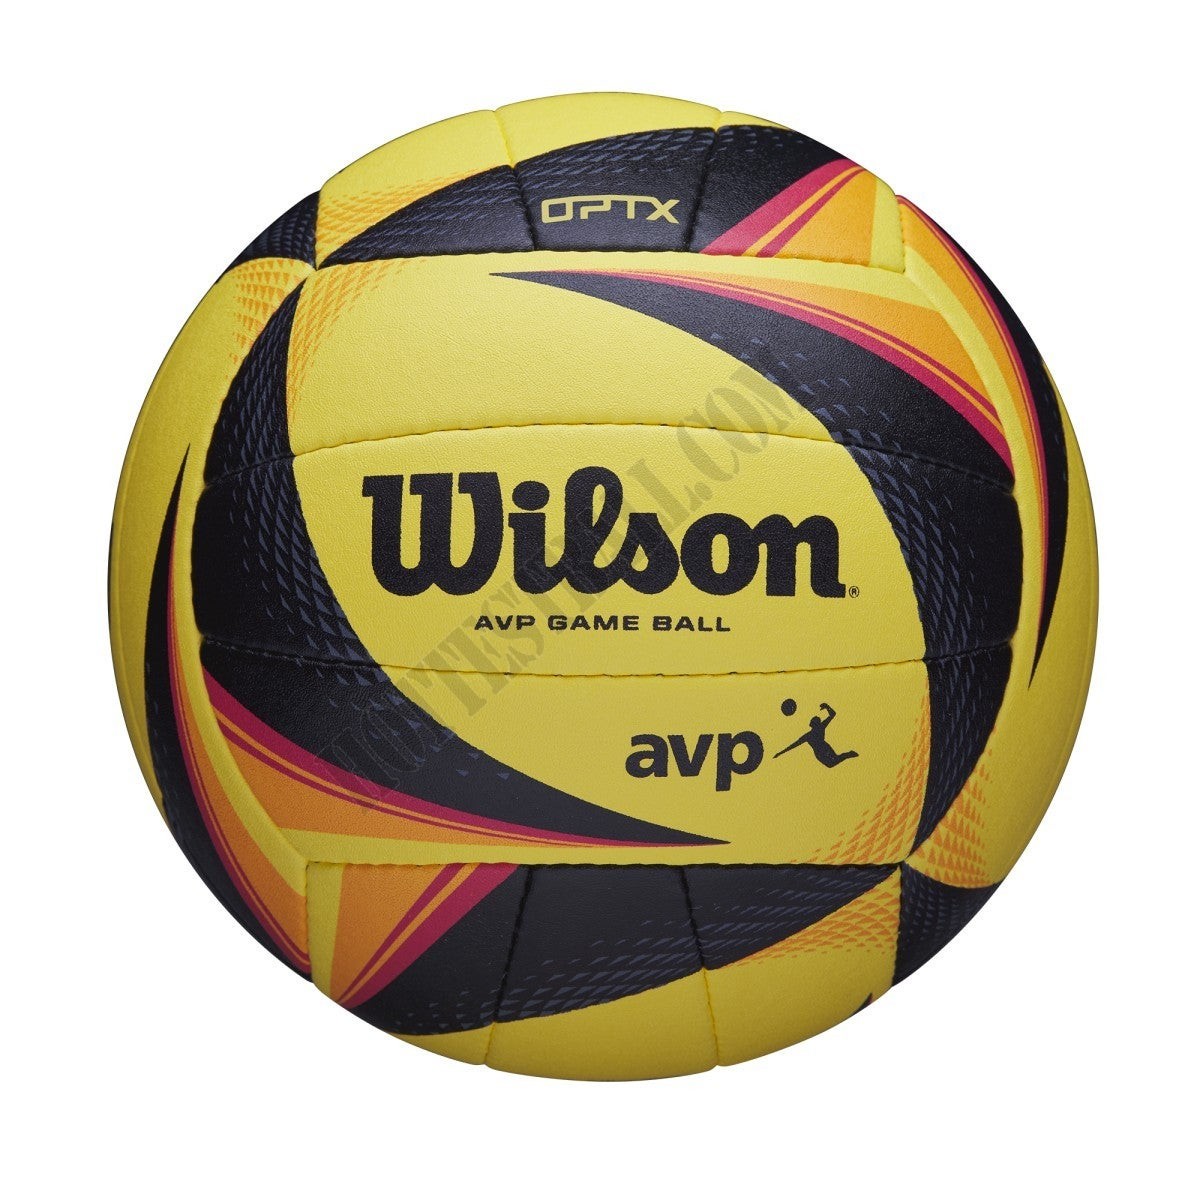 OPTX AVP Game Volleyball - Deflated - Wilson Discount Store - -0